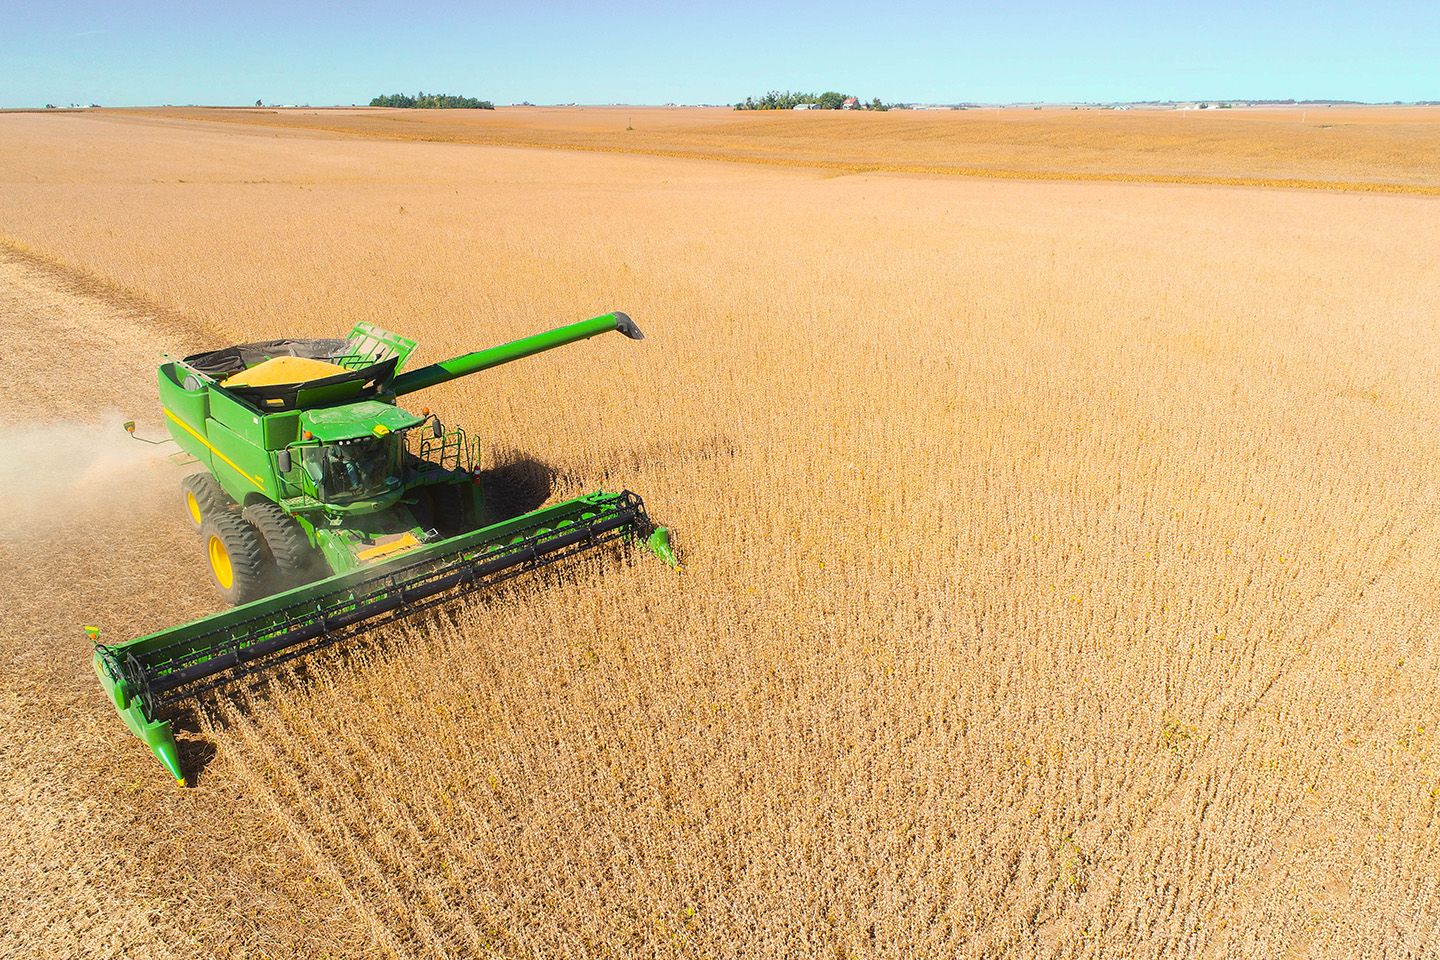 John Deere combine in soybean field during harvest